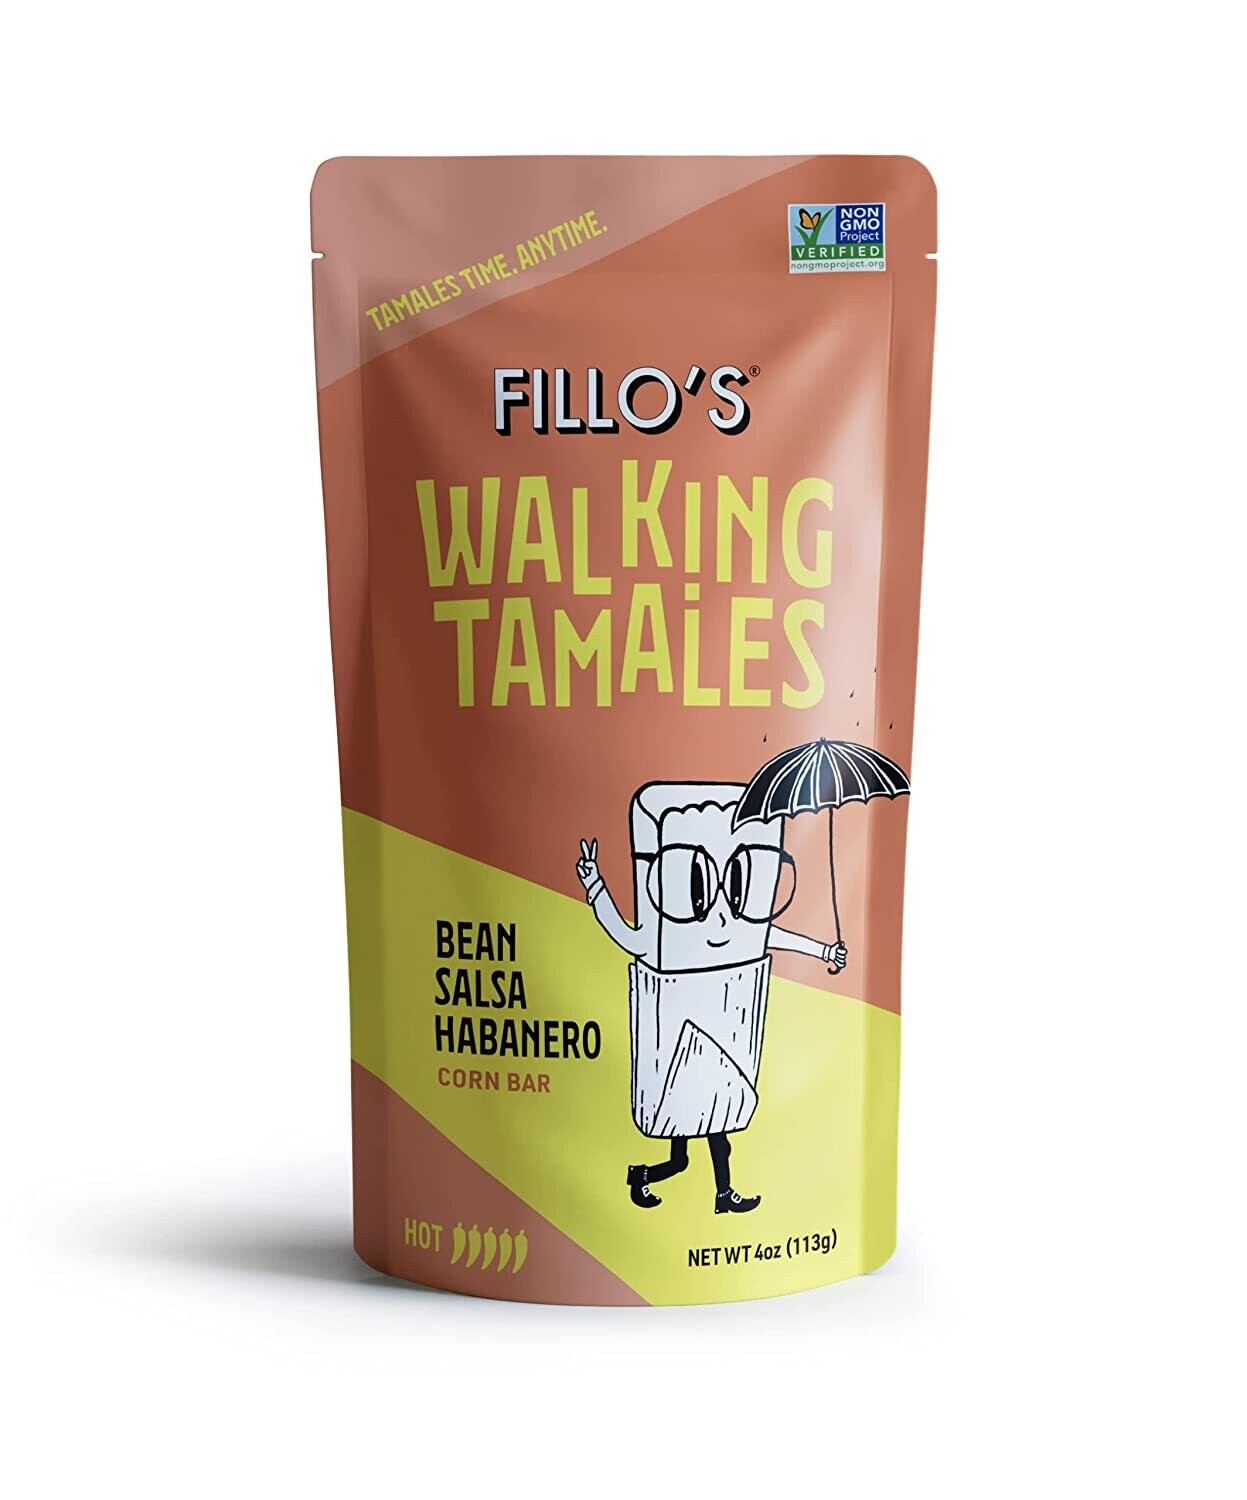 Fillo's Walking Tamales Corn Bar - Bean Salsa Habanero (hot)